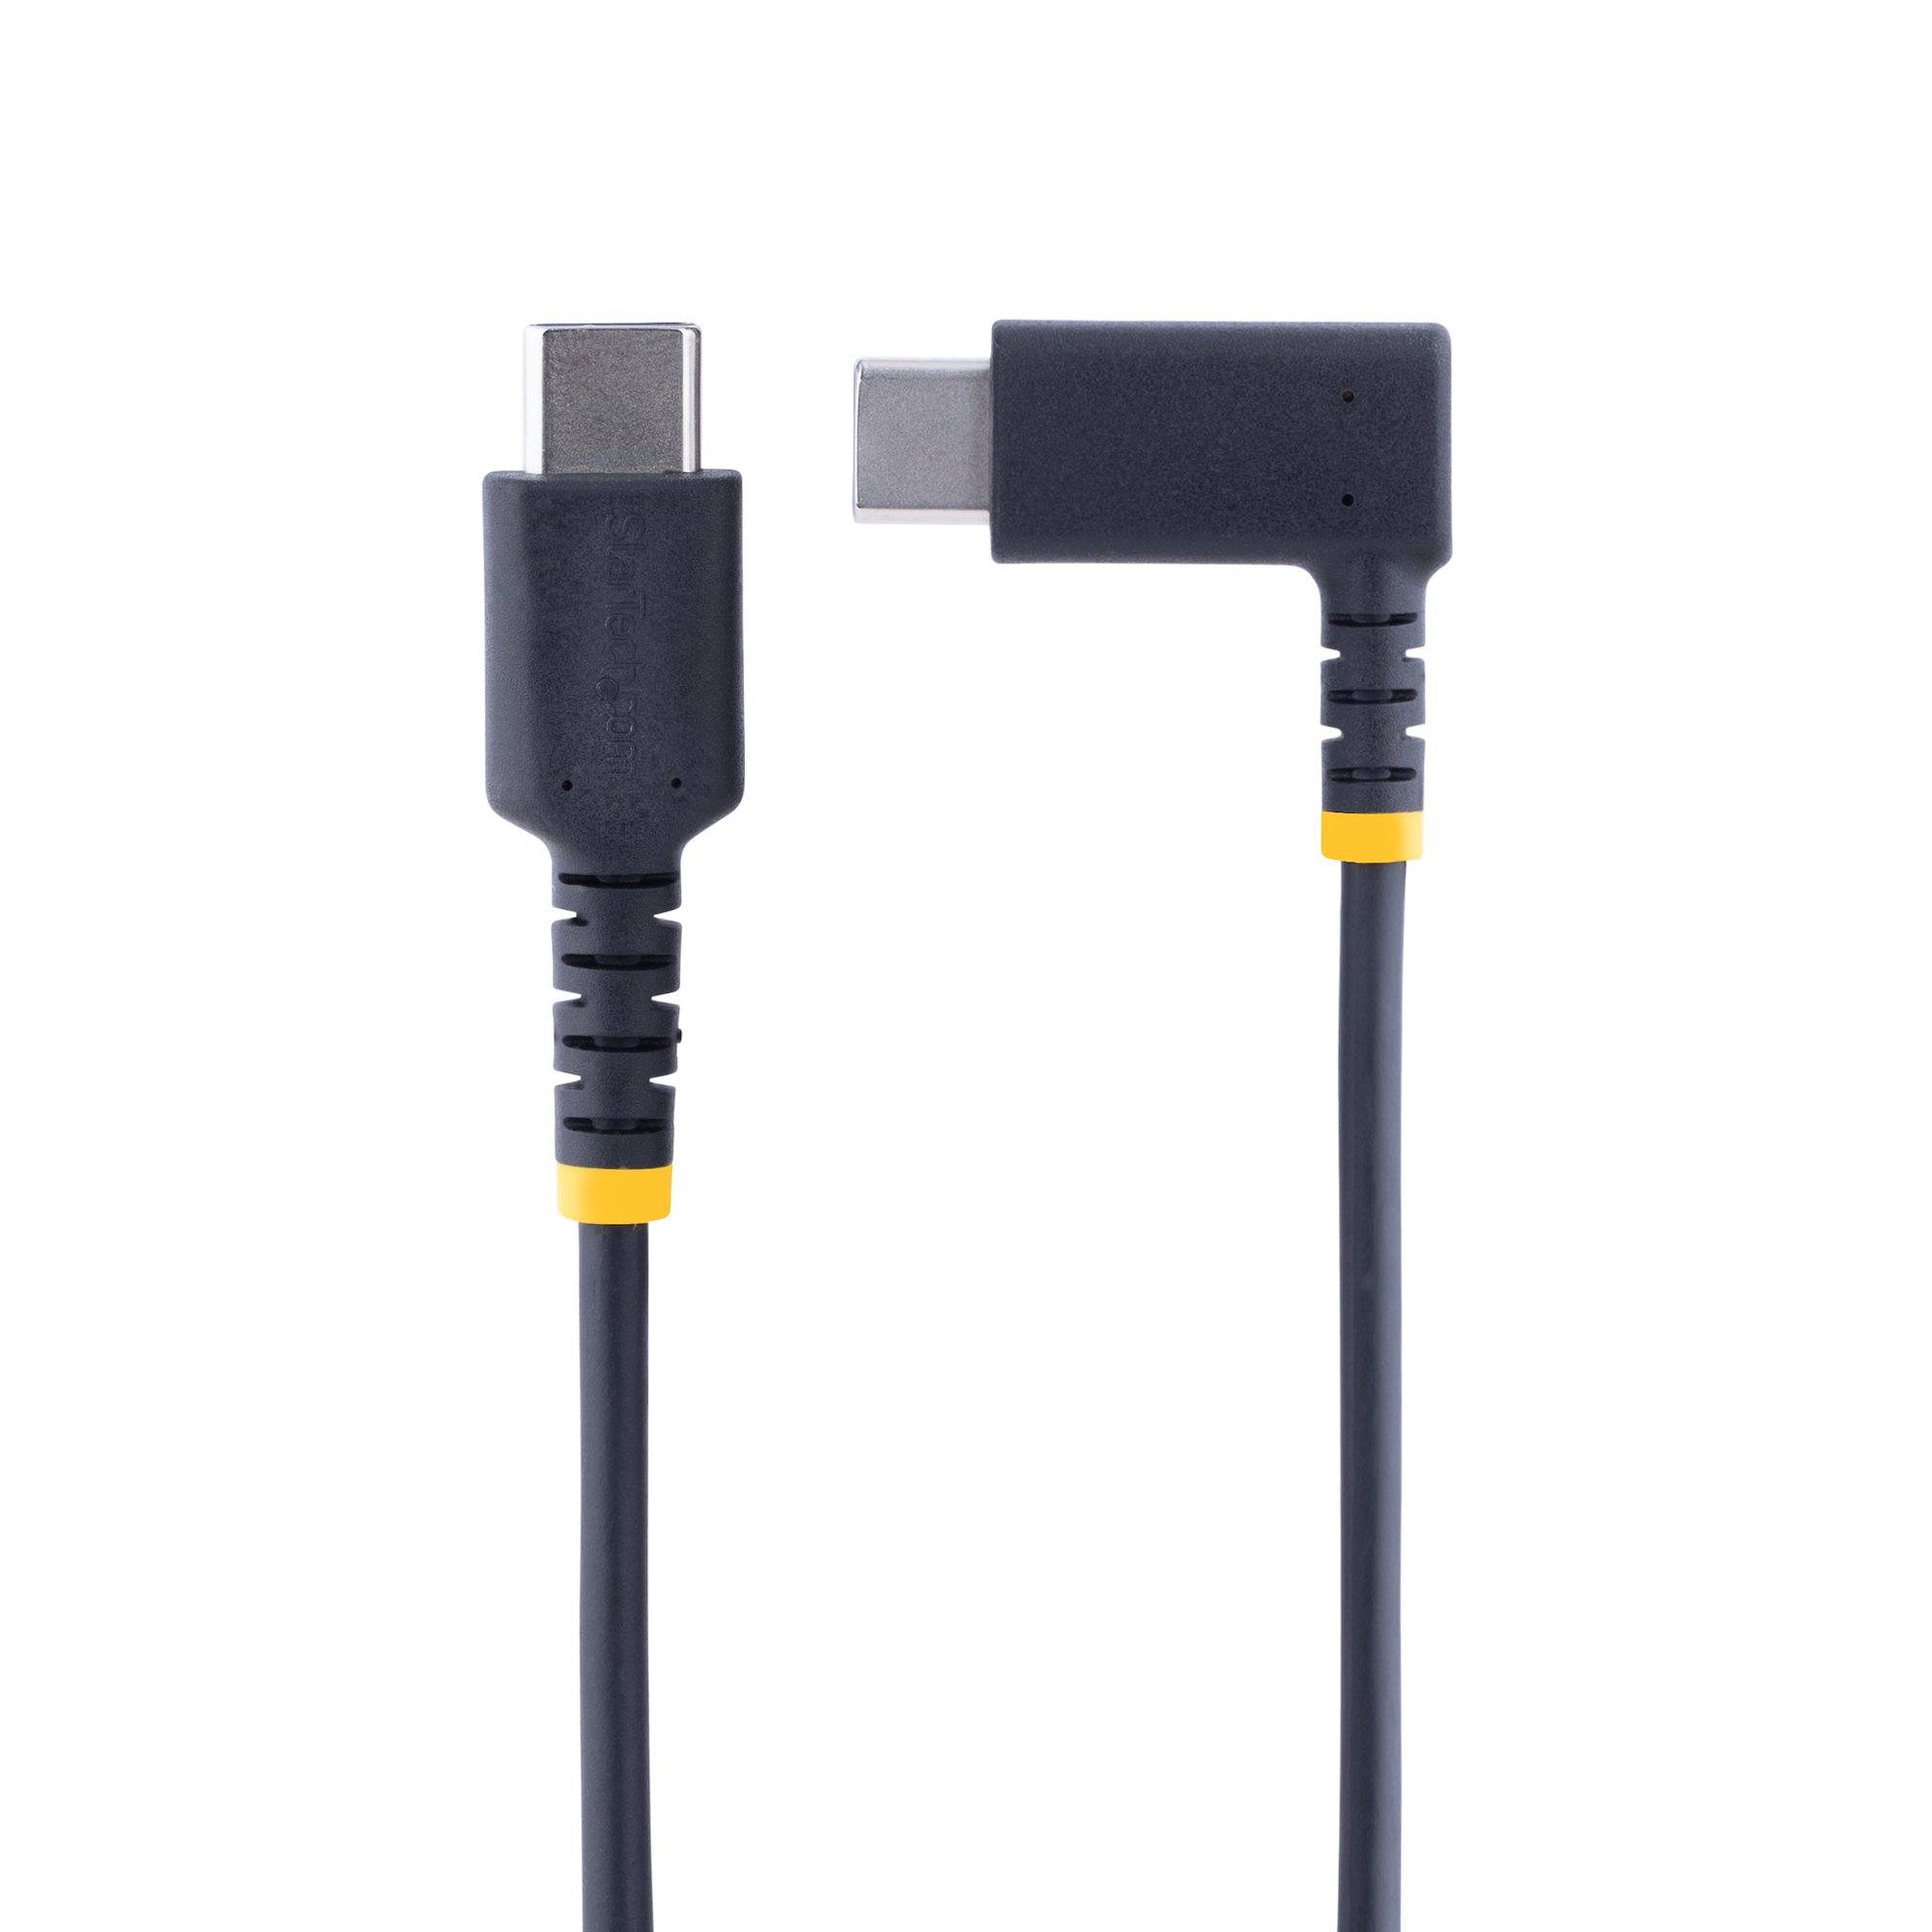 Rca Informatique - image du produit : 15CM USB-C CHARGING CABLE FAST CHARGE - RIGHT ANGLE USBC CABLE